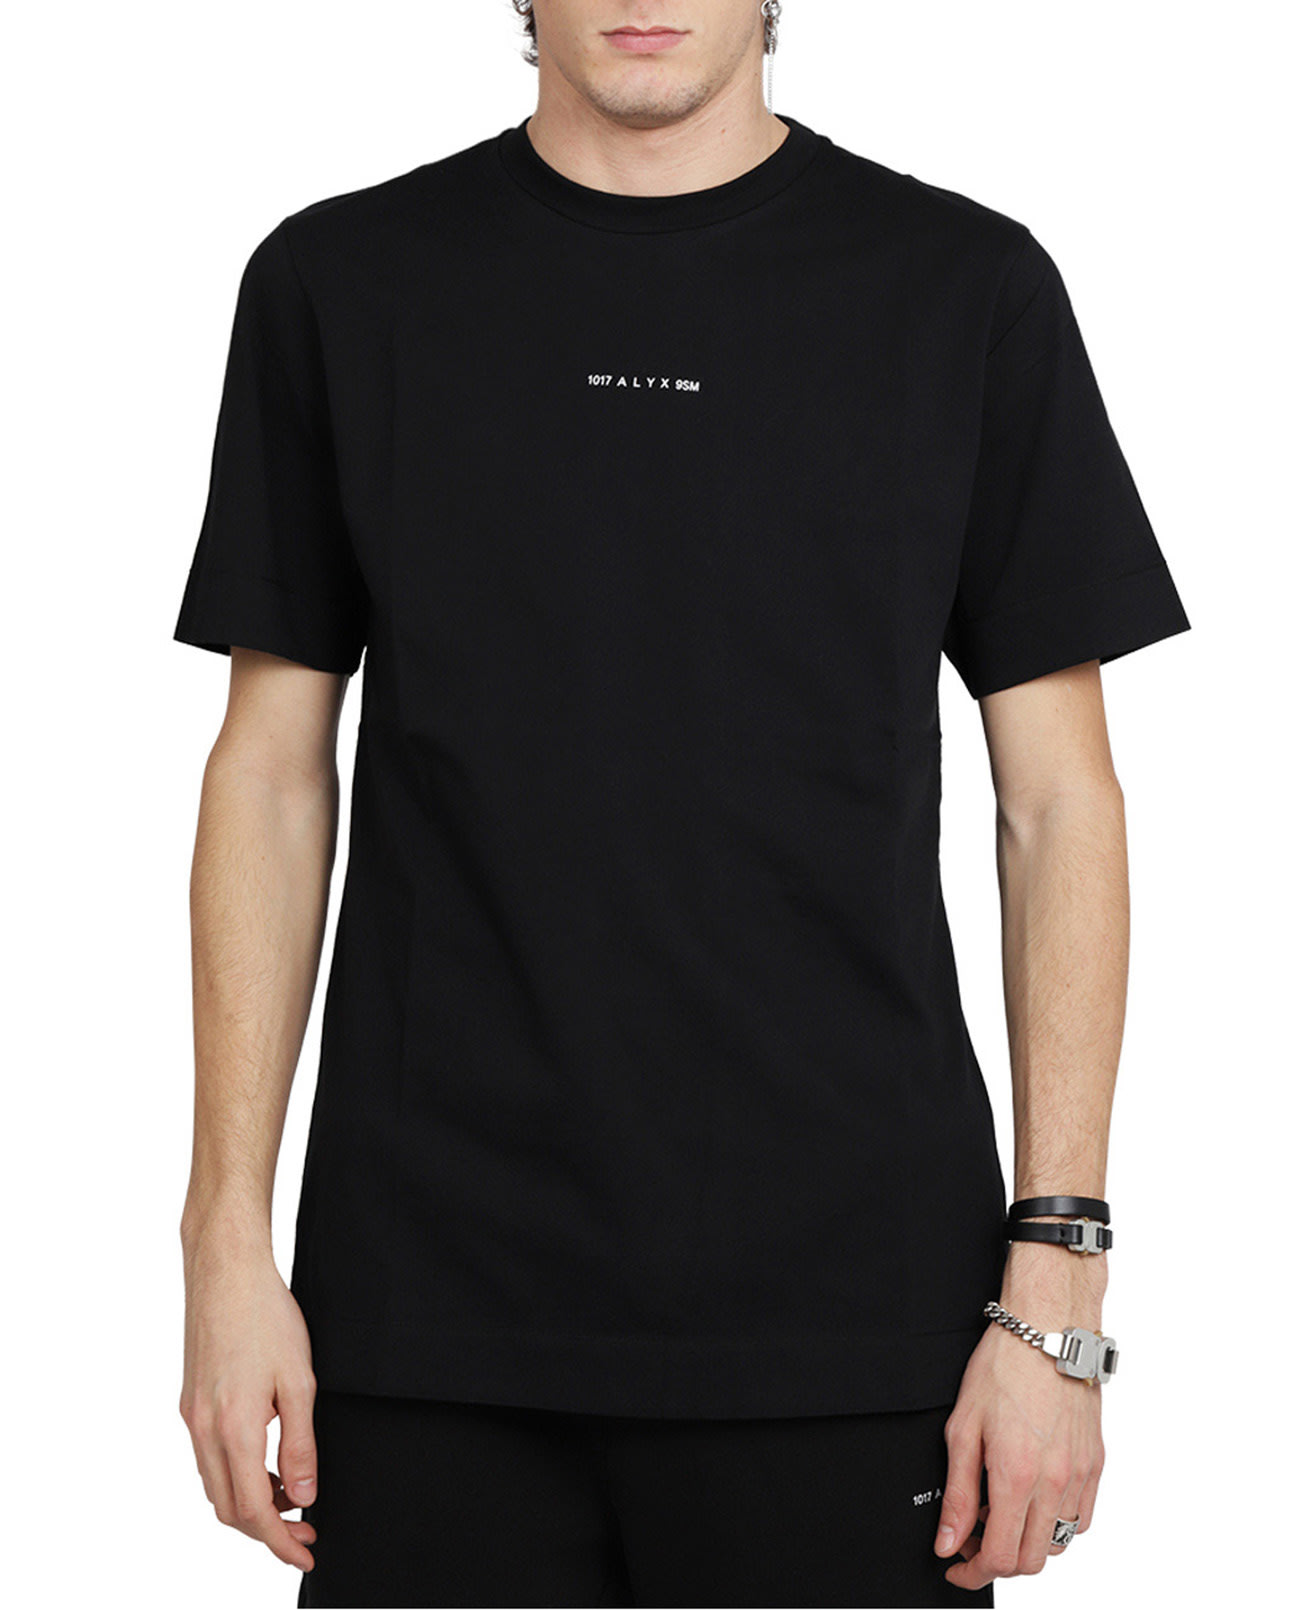 1017 Alyx 9sm Black Graphic T-shirt